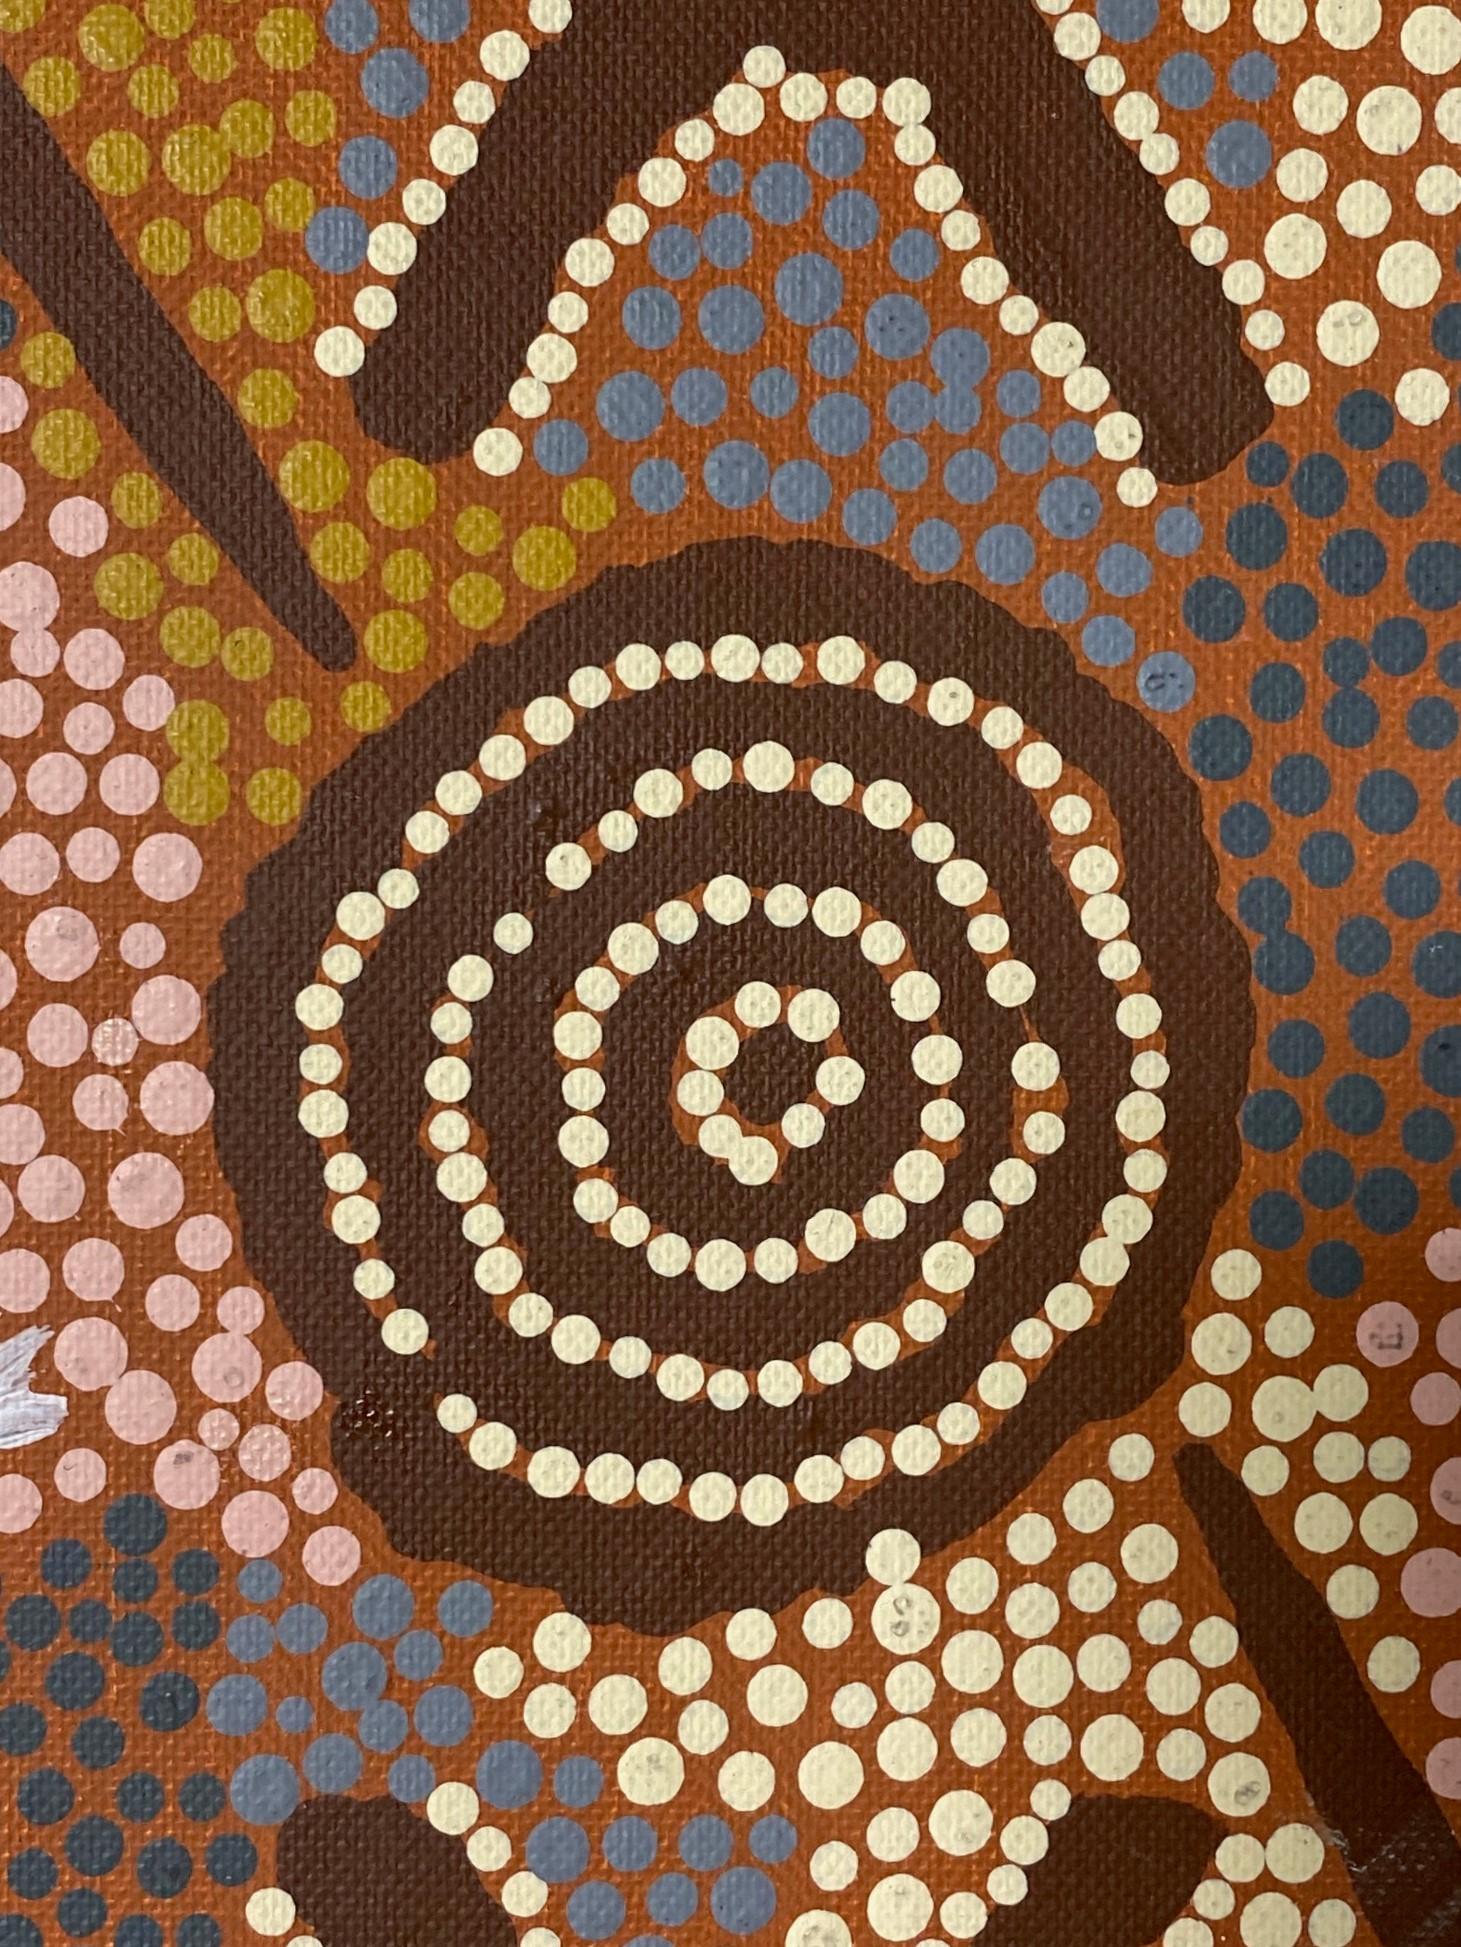 Hand-Painted Clifford Possum Tjapaltjarri Signed Indigenous Aboriginal Art Original Painting  For Sale